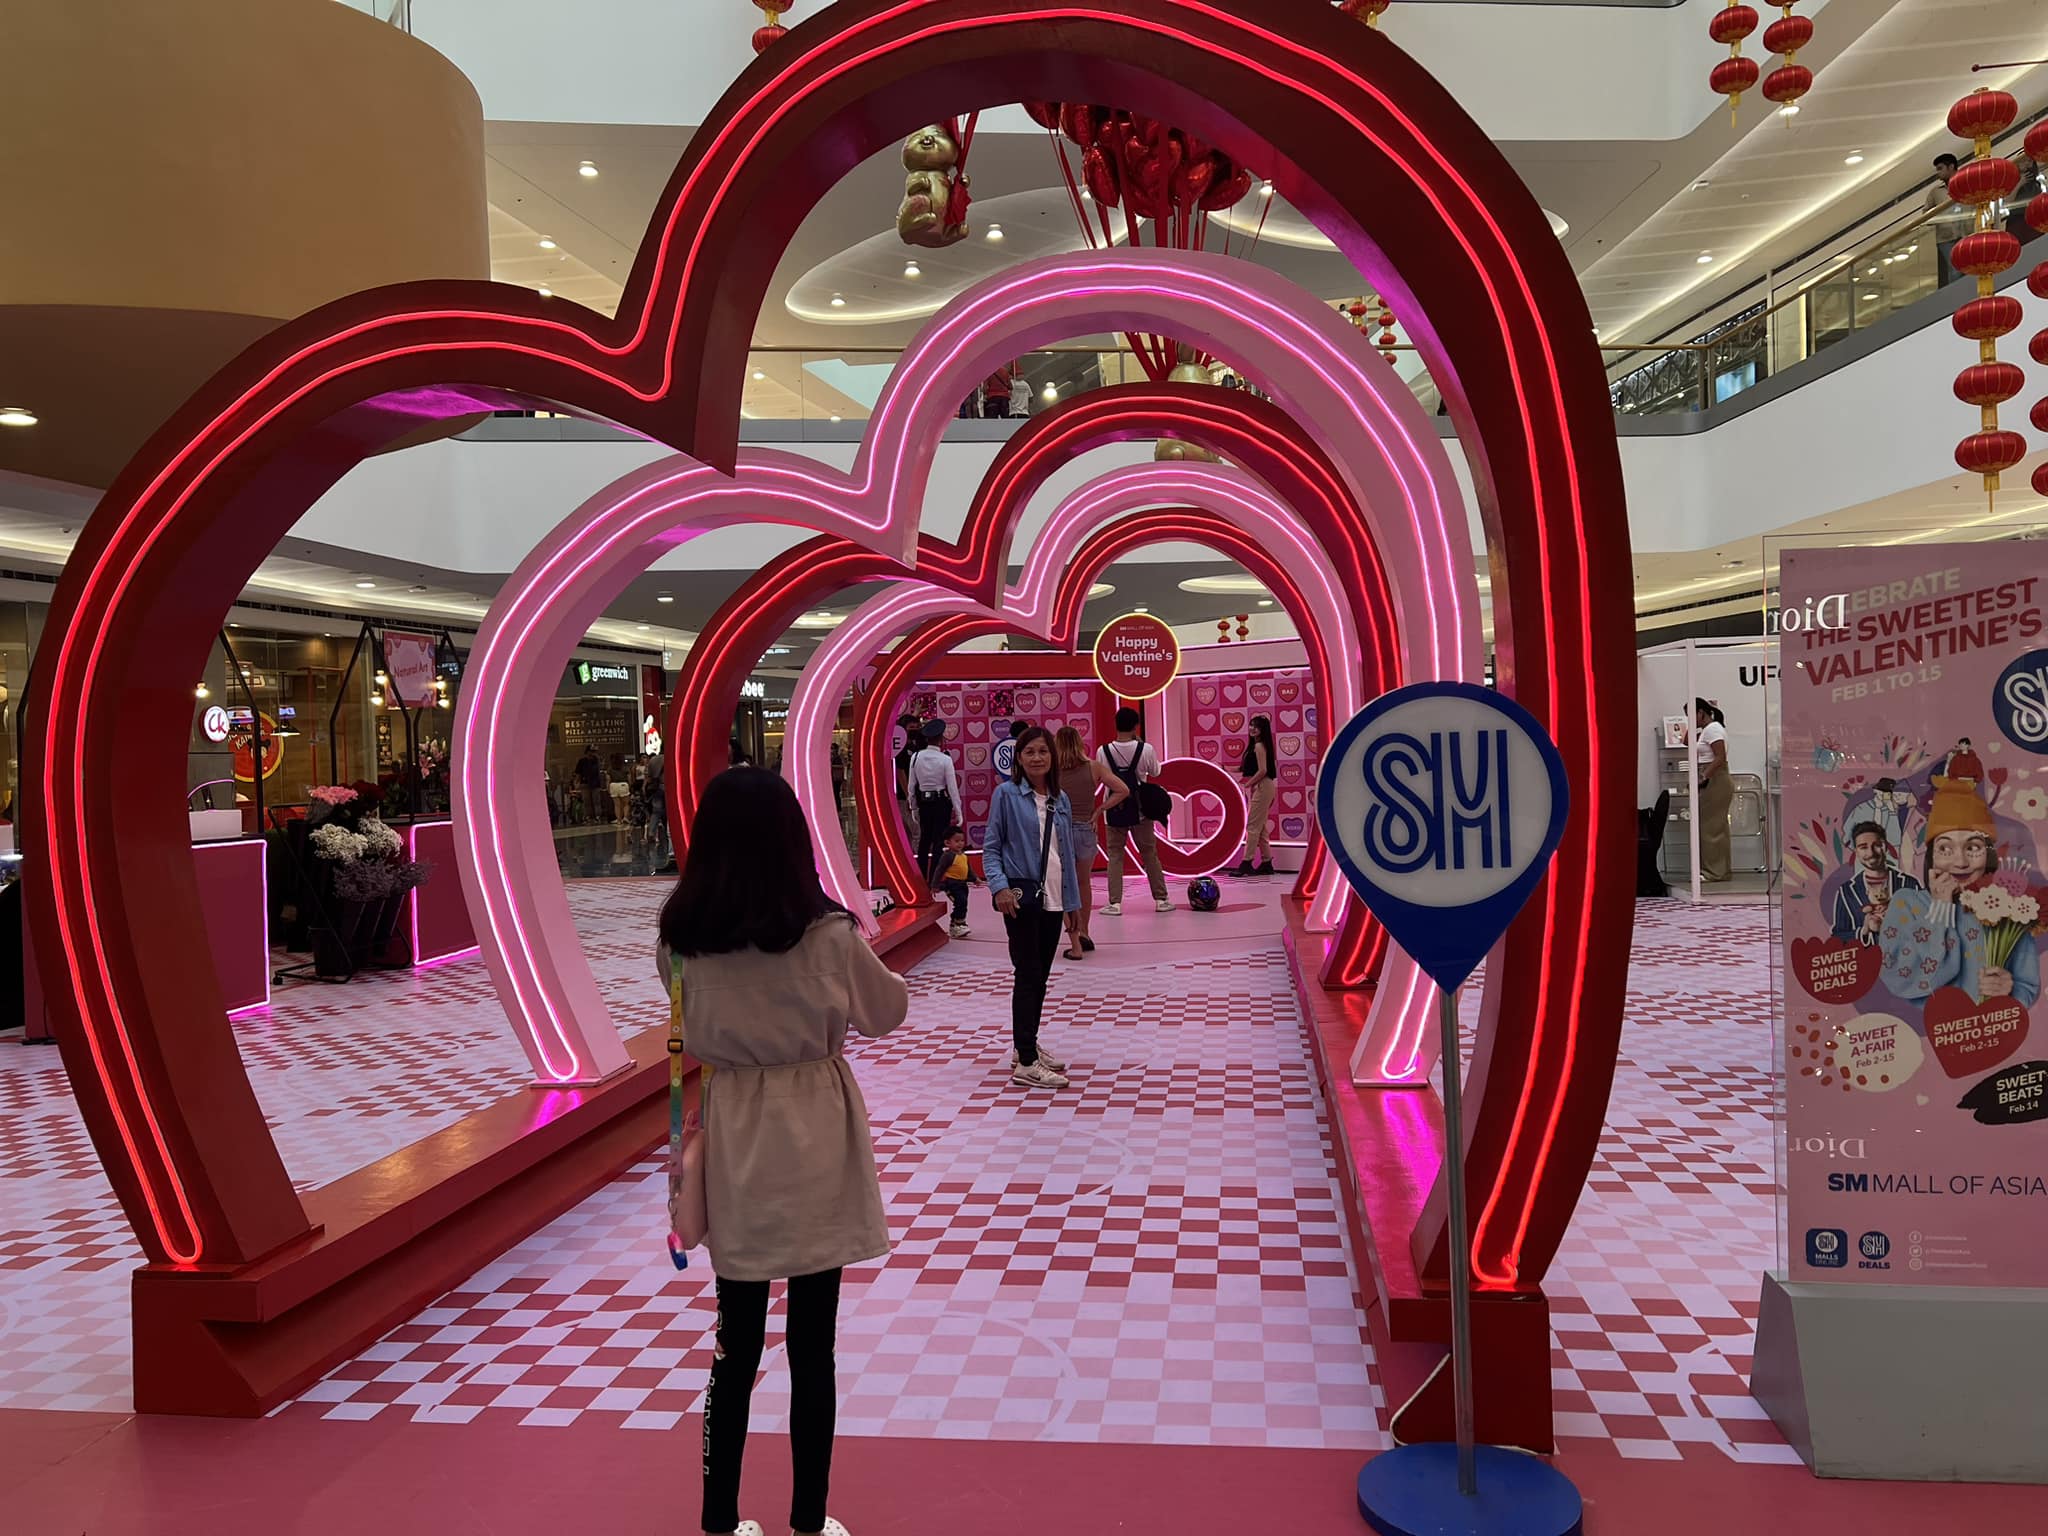 Sweet-A-Fair sa SM Mall of Asia - hugis pusong arko